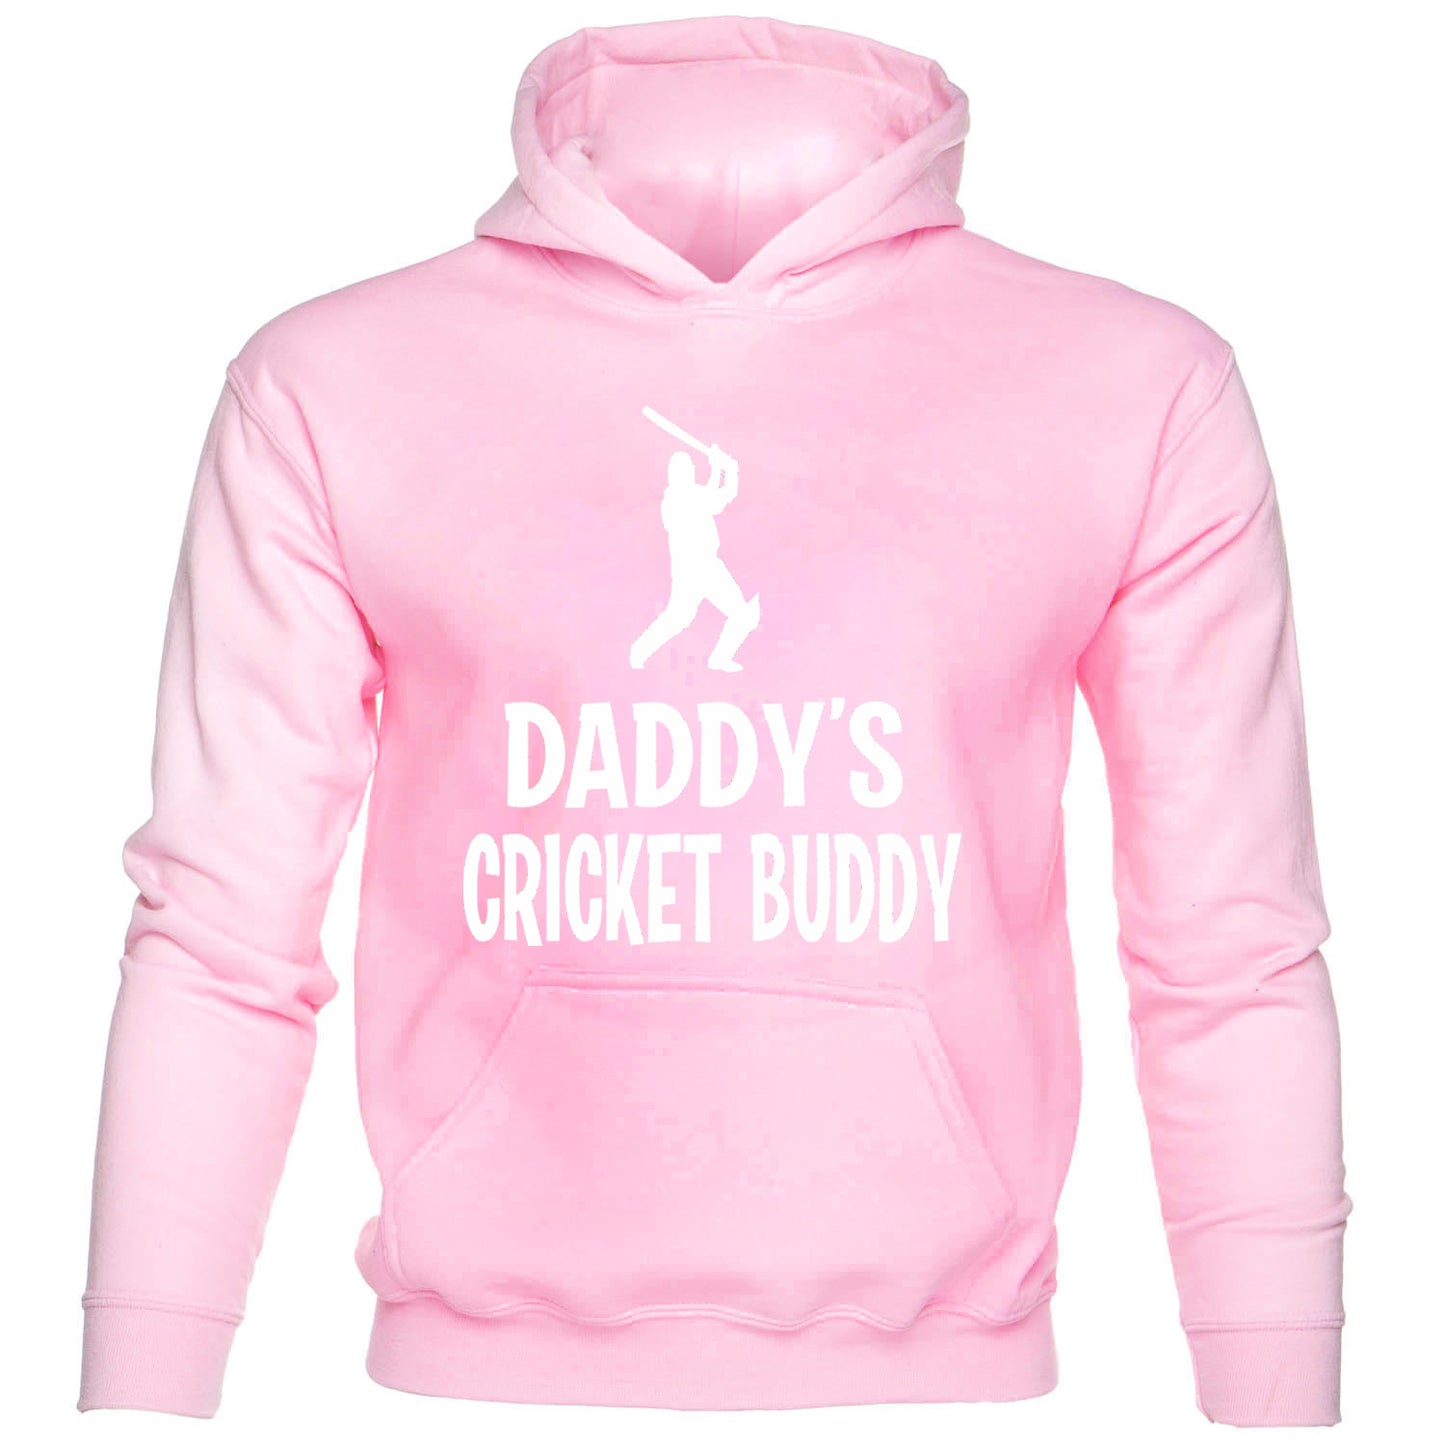 Daddy's Cricket Buddy Hoodie